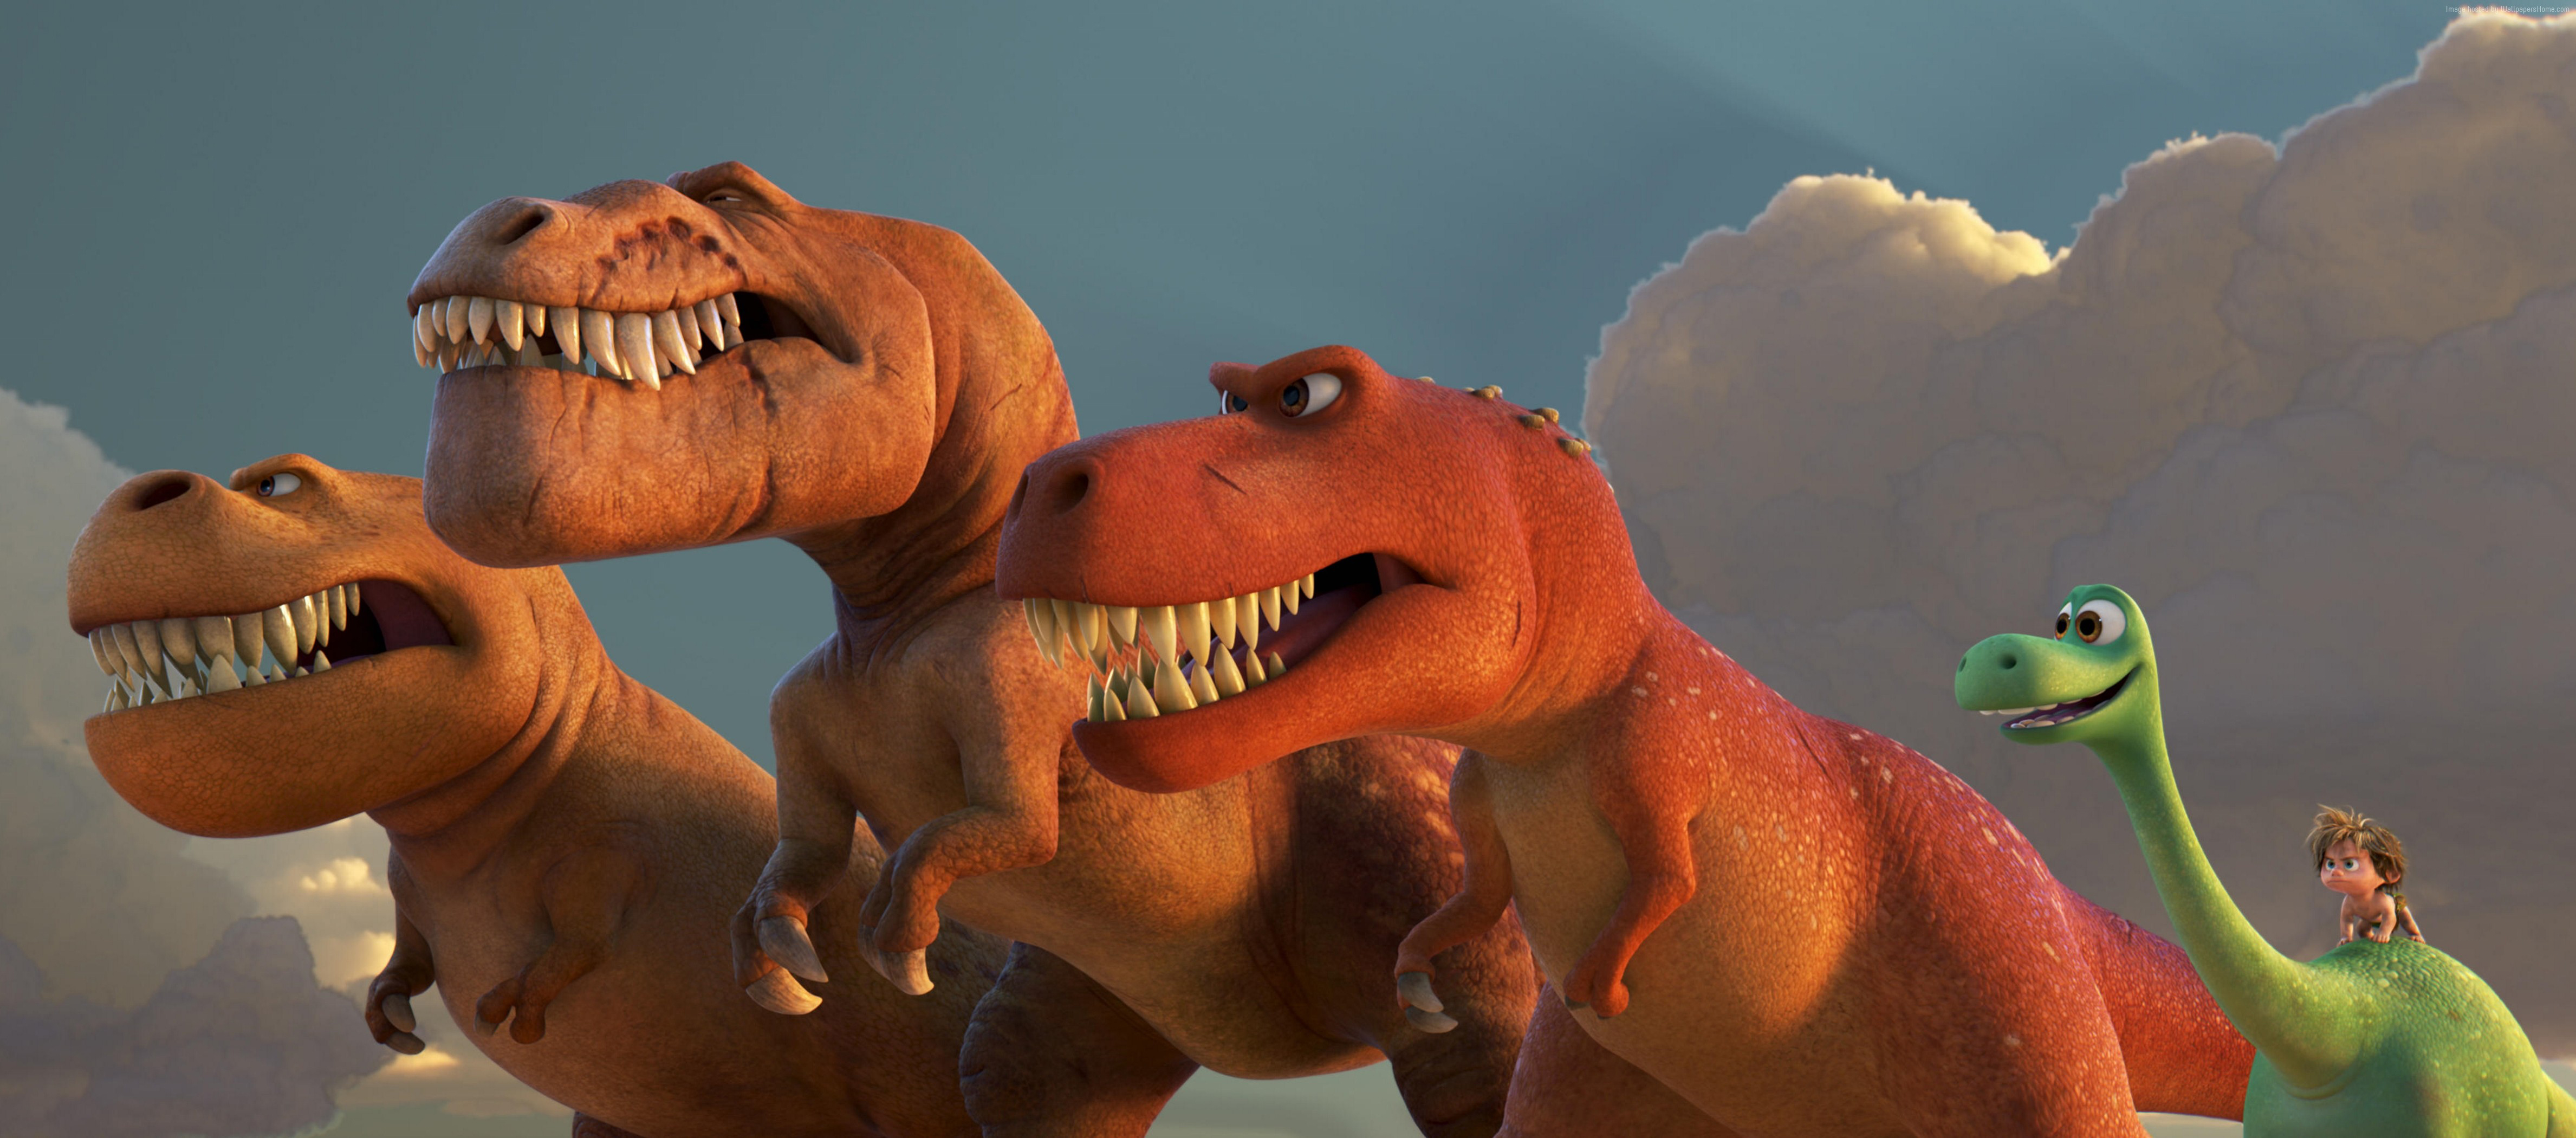 Динозаврами 2015. The good Dinosaur (хороший динозавр) (2015). Динозавр Арло Дисней. Хороший динозавр семья Арло.